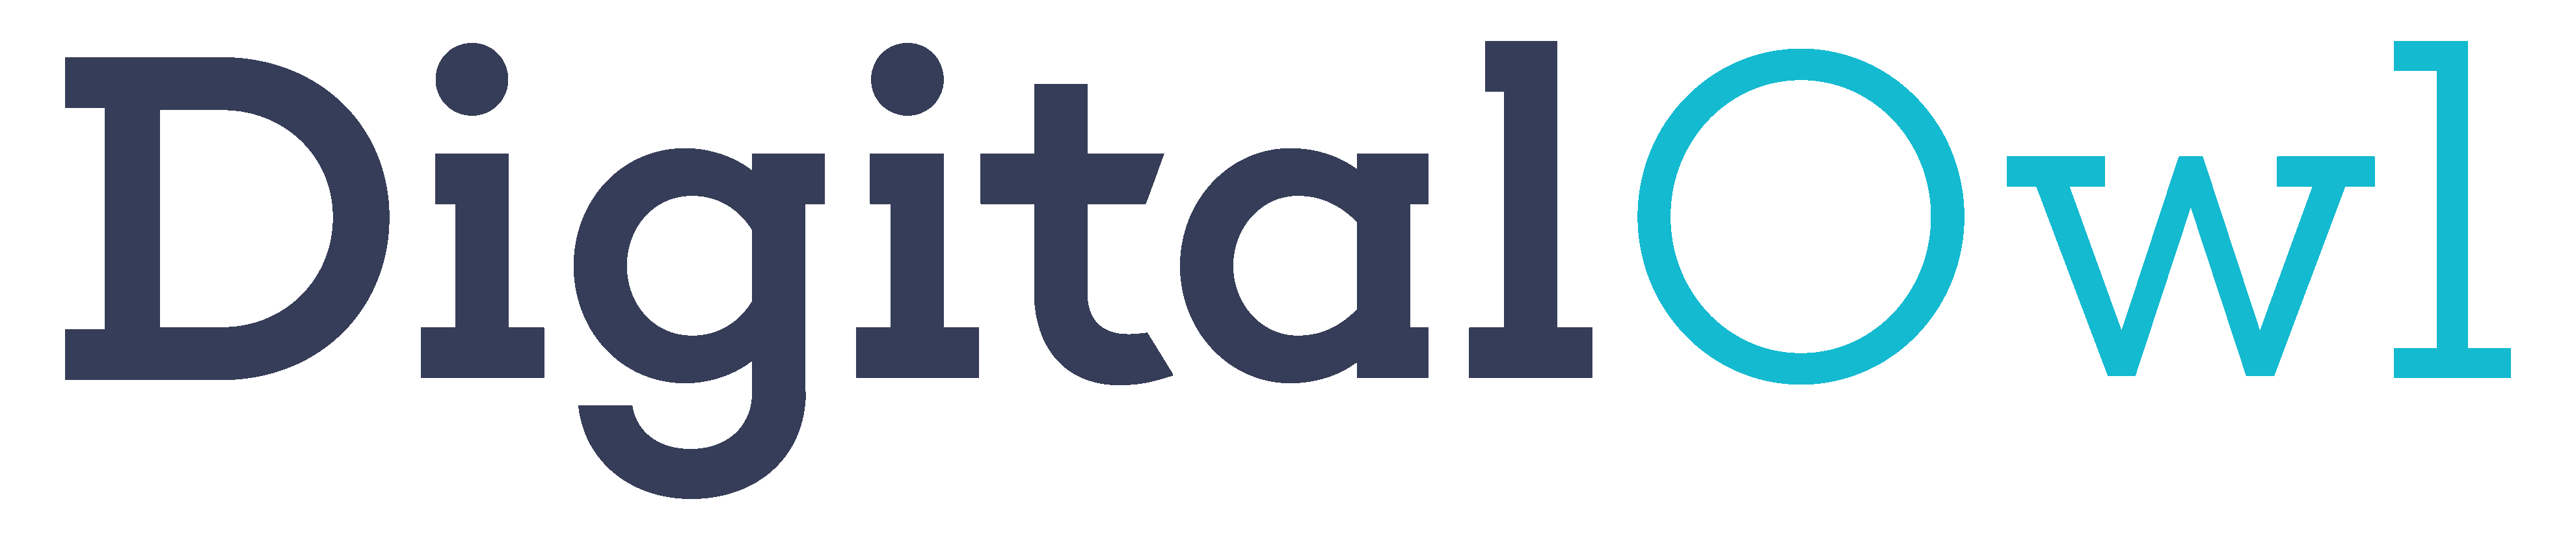 logo-digital-owl.png